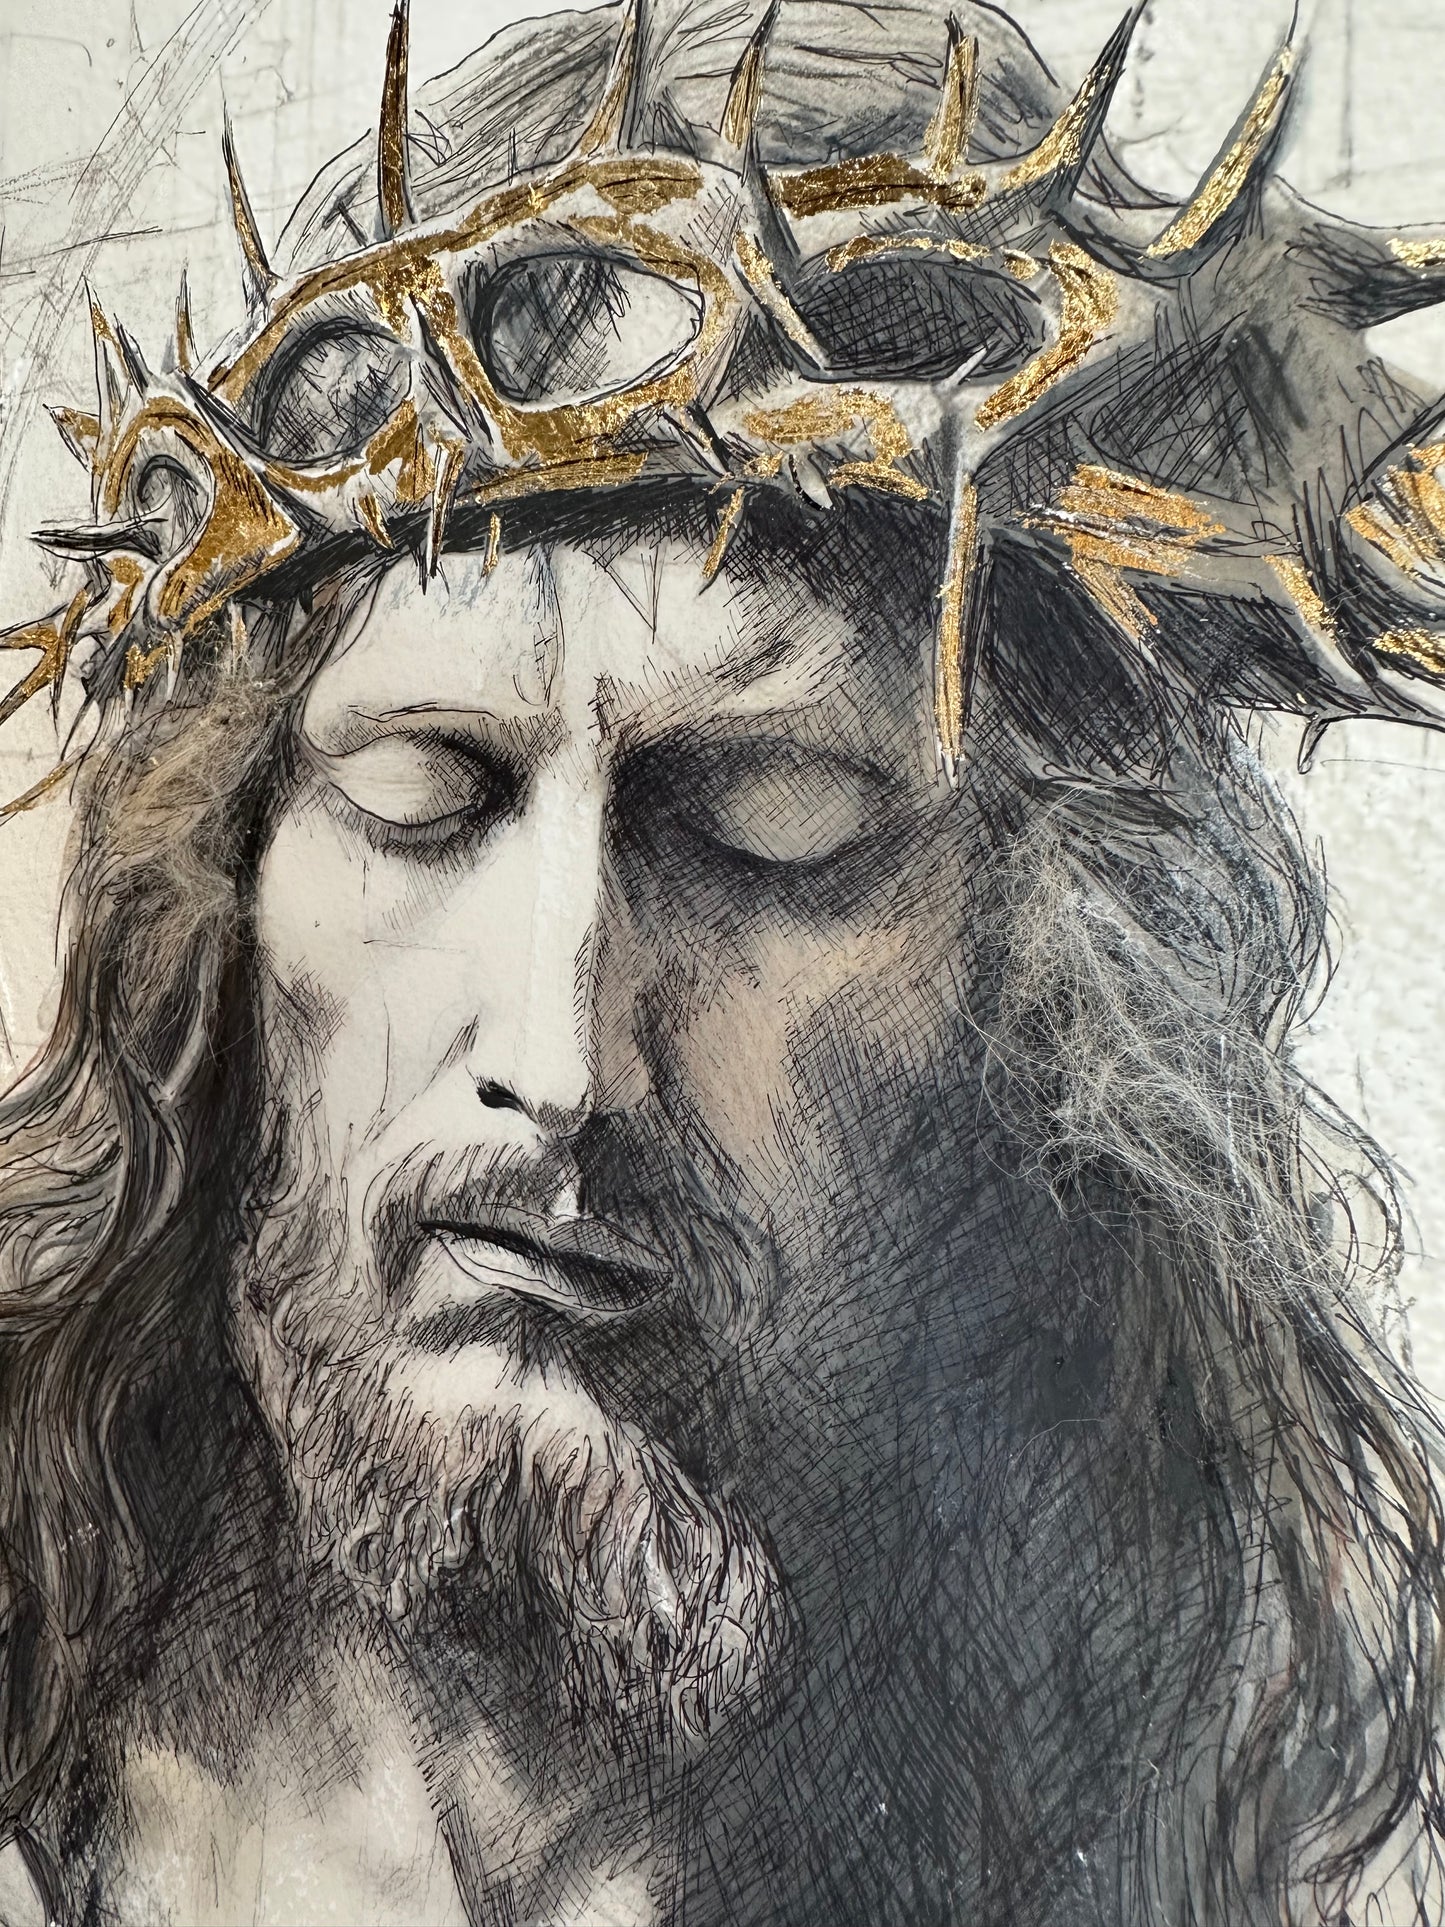 Our Father  - Jesus Portrait Three